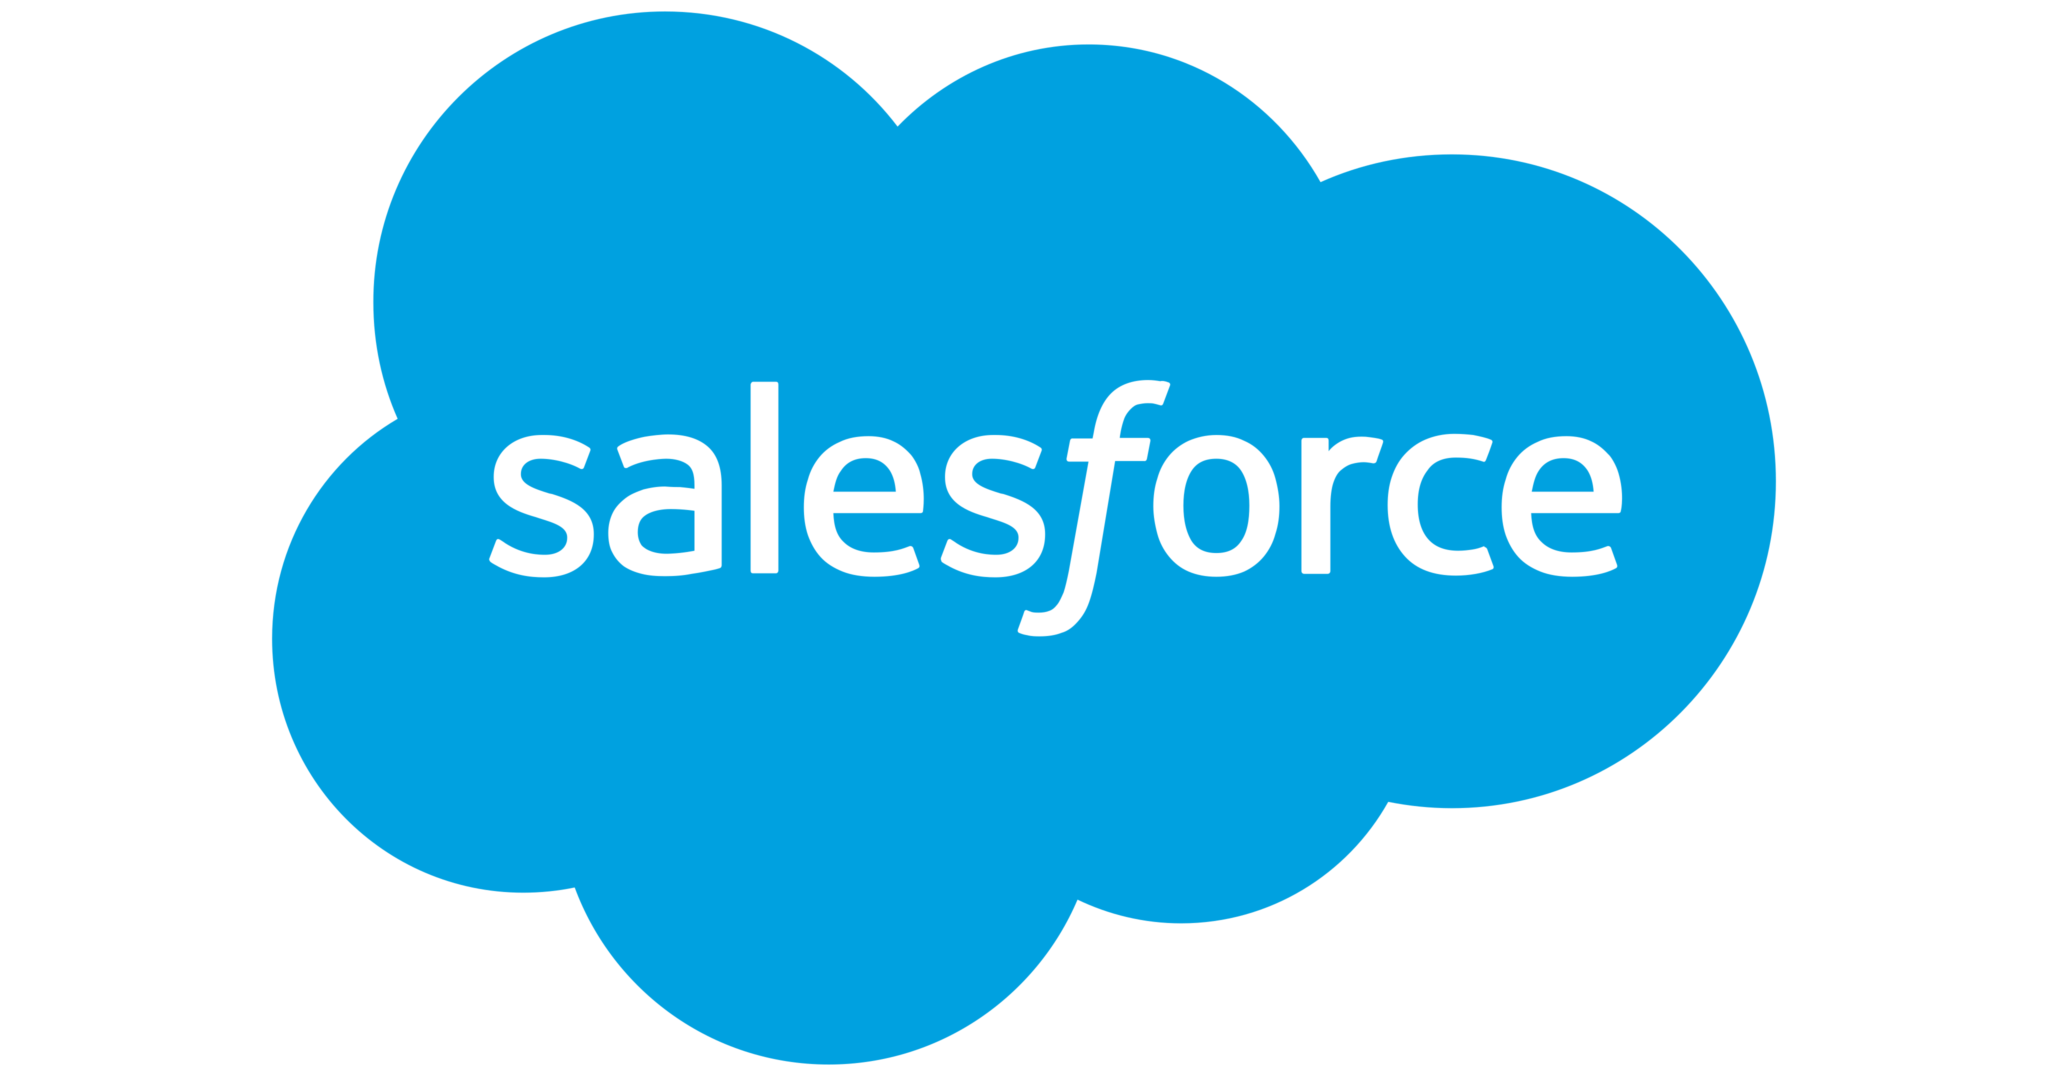 salesforce-logo-0-2048x2048-1